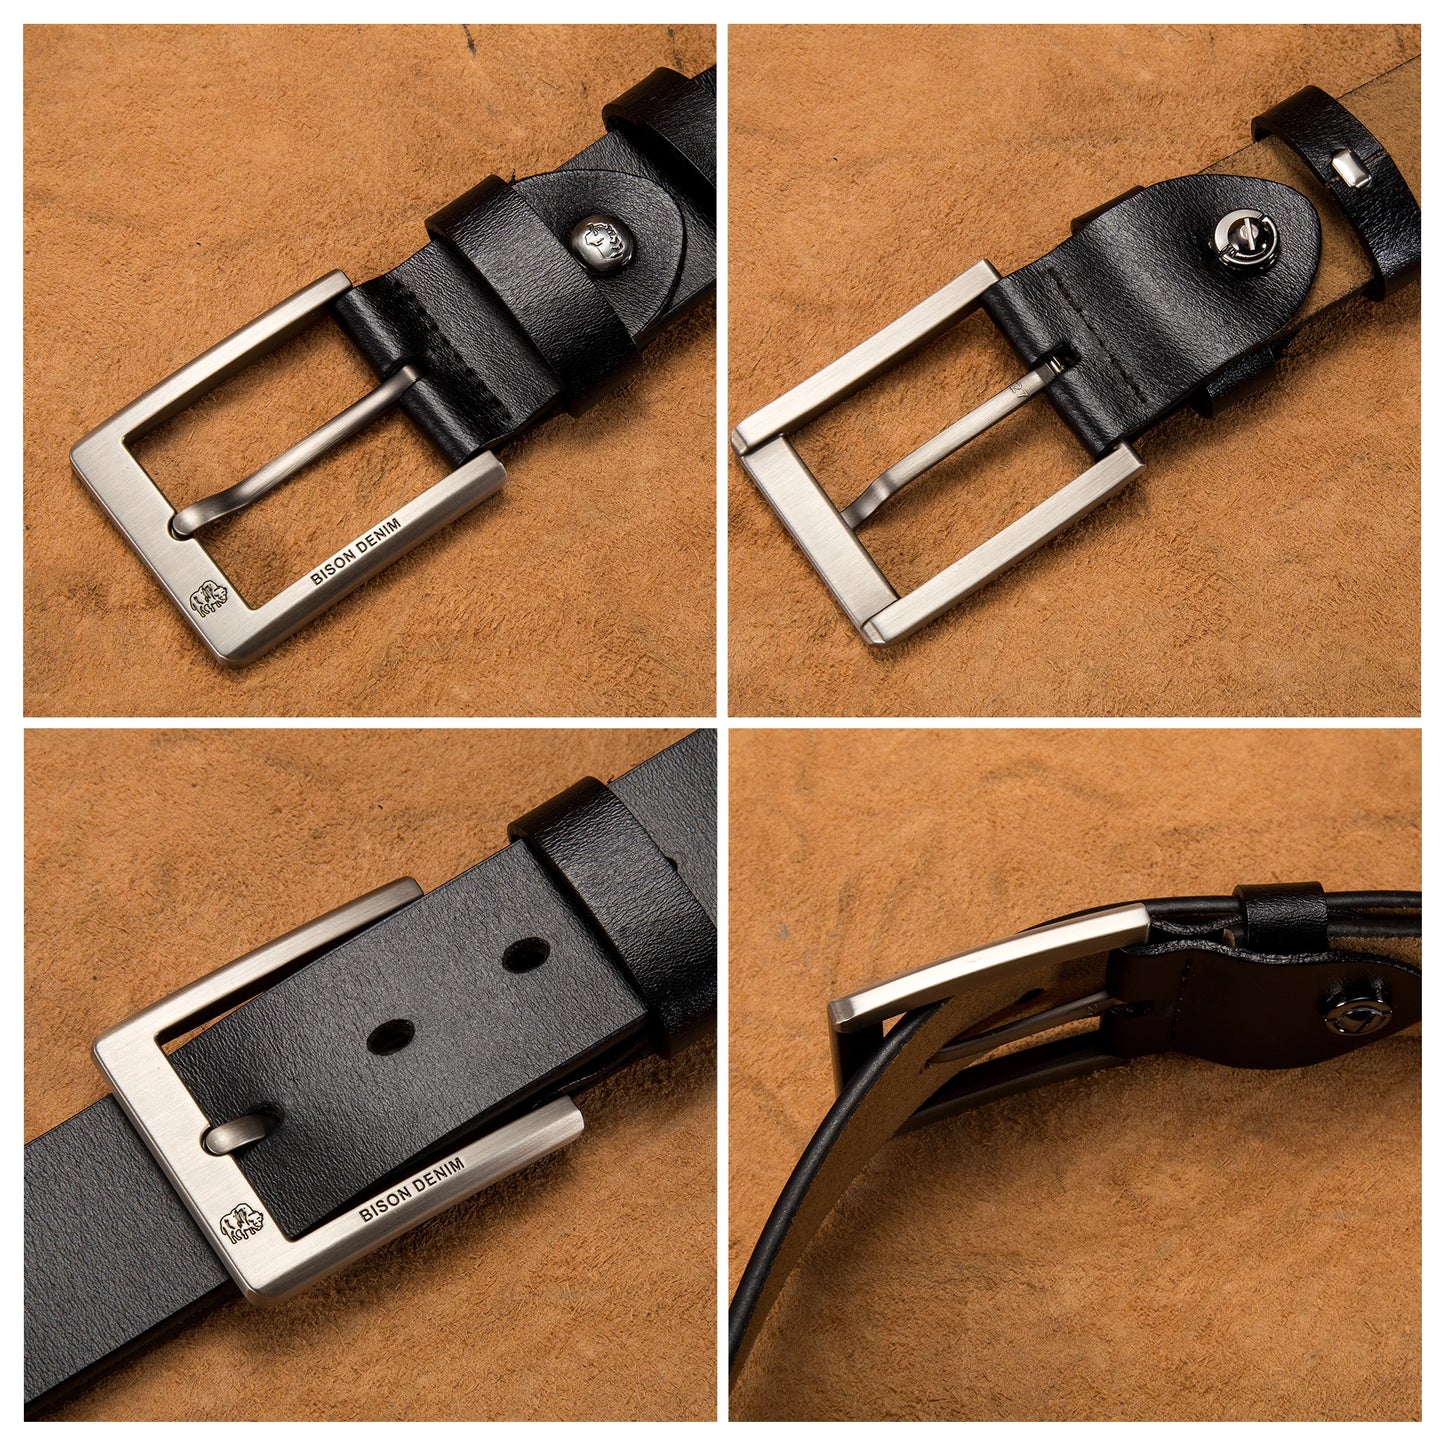 BISON DENIM Men's Vintage Style Luxury Leather Cowboy Belt with Pin Buckle